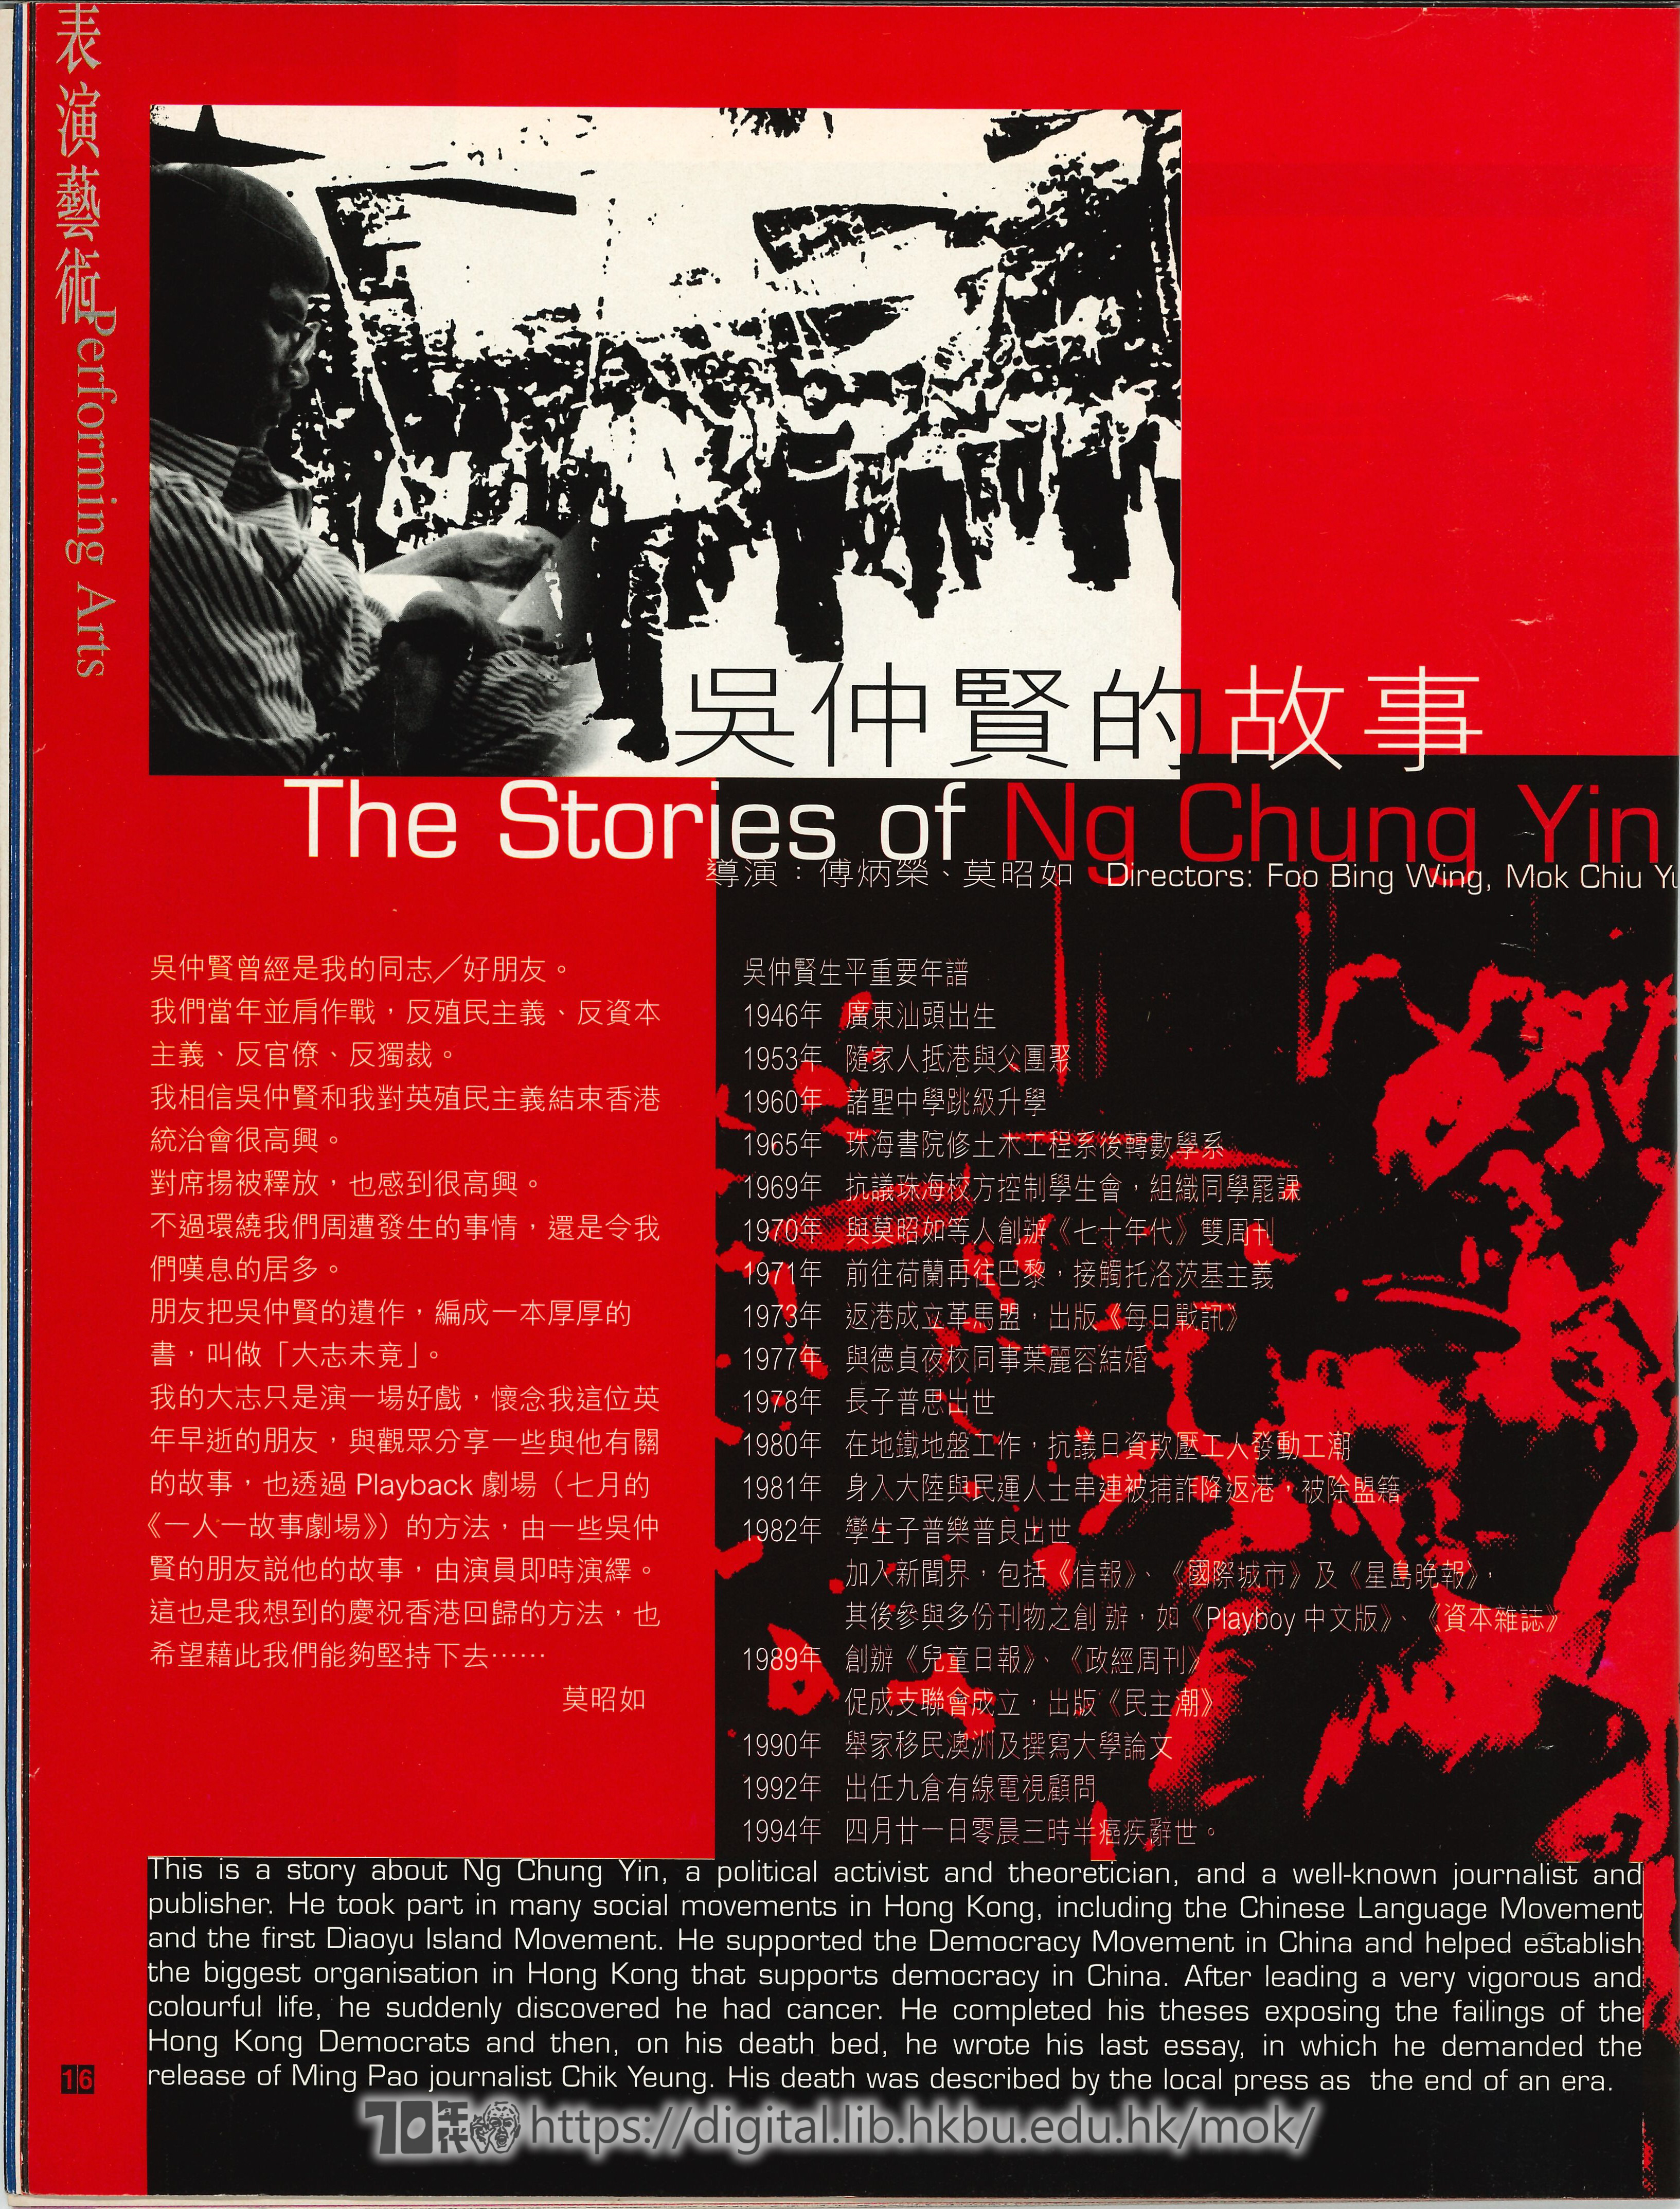 The Story of Ng Chung Yin  吳仲賢的故事  